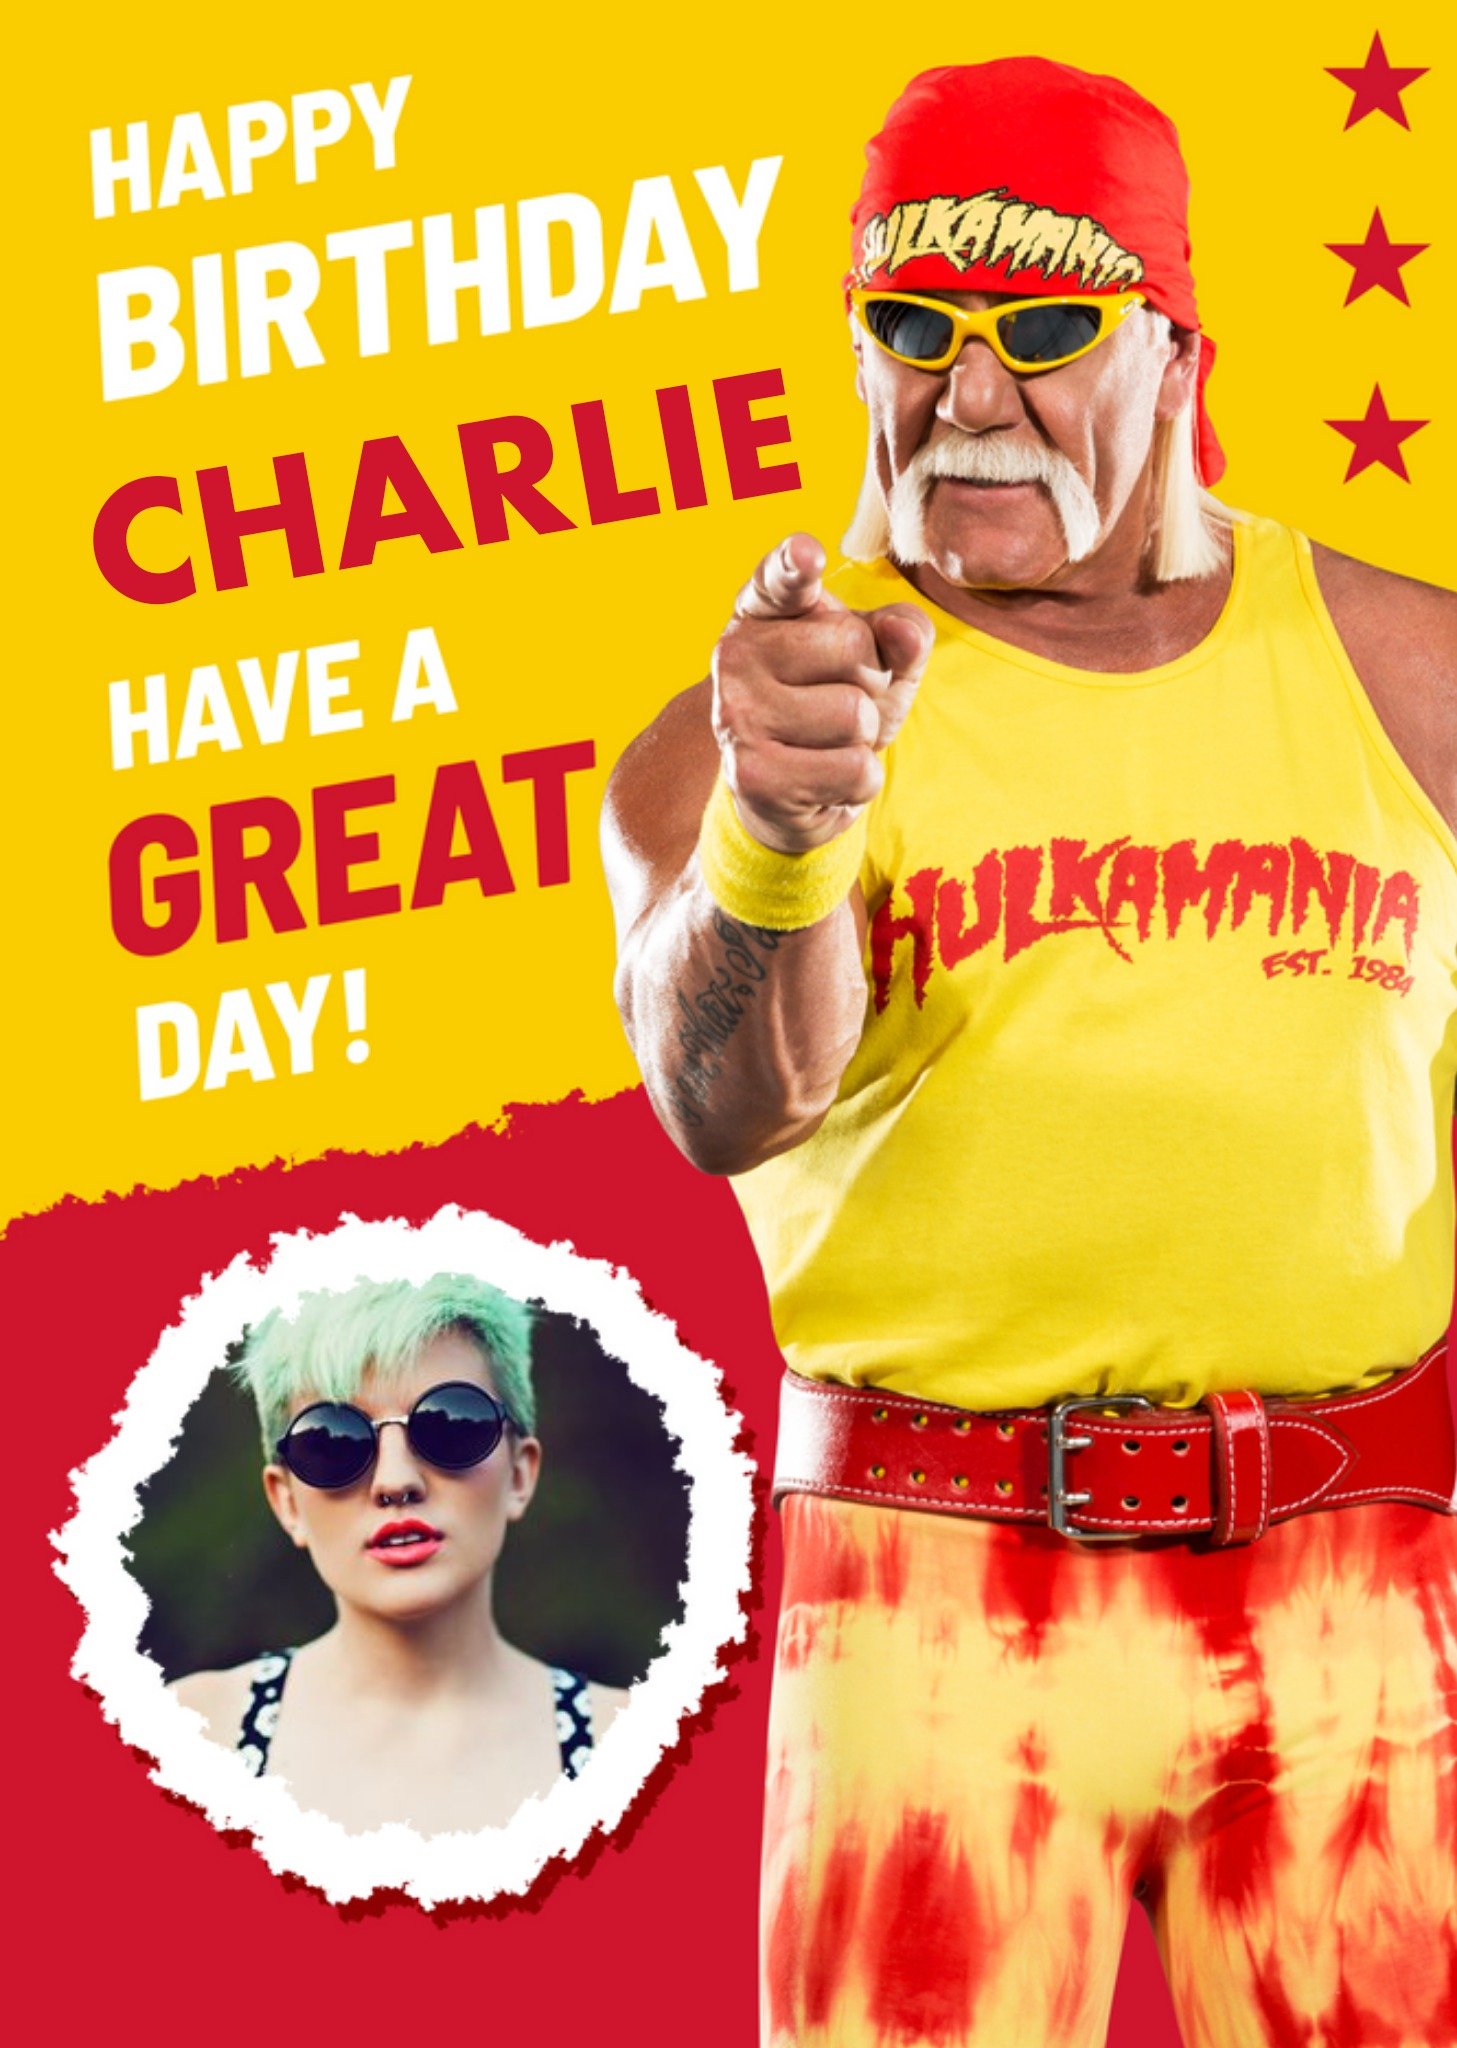 Wwe Hulkmania Have A Great Day Photo Upload Birthday Card, Large